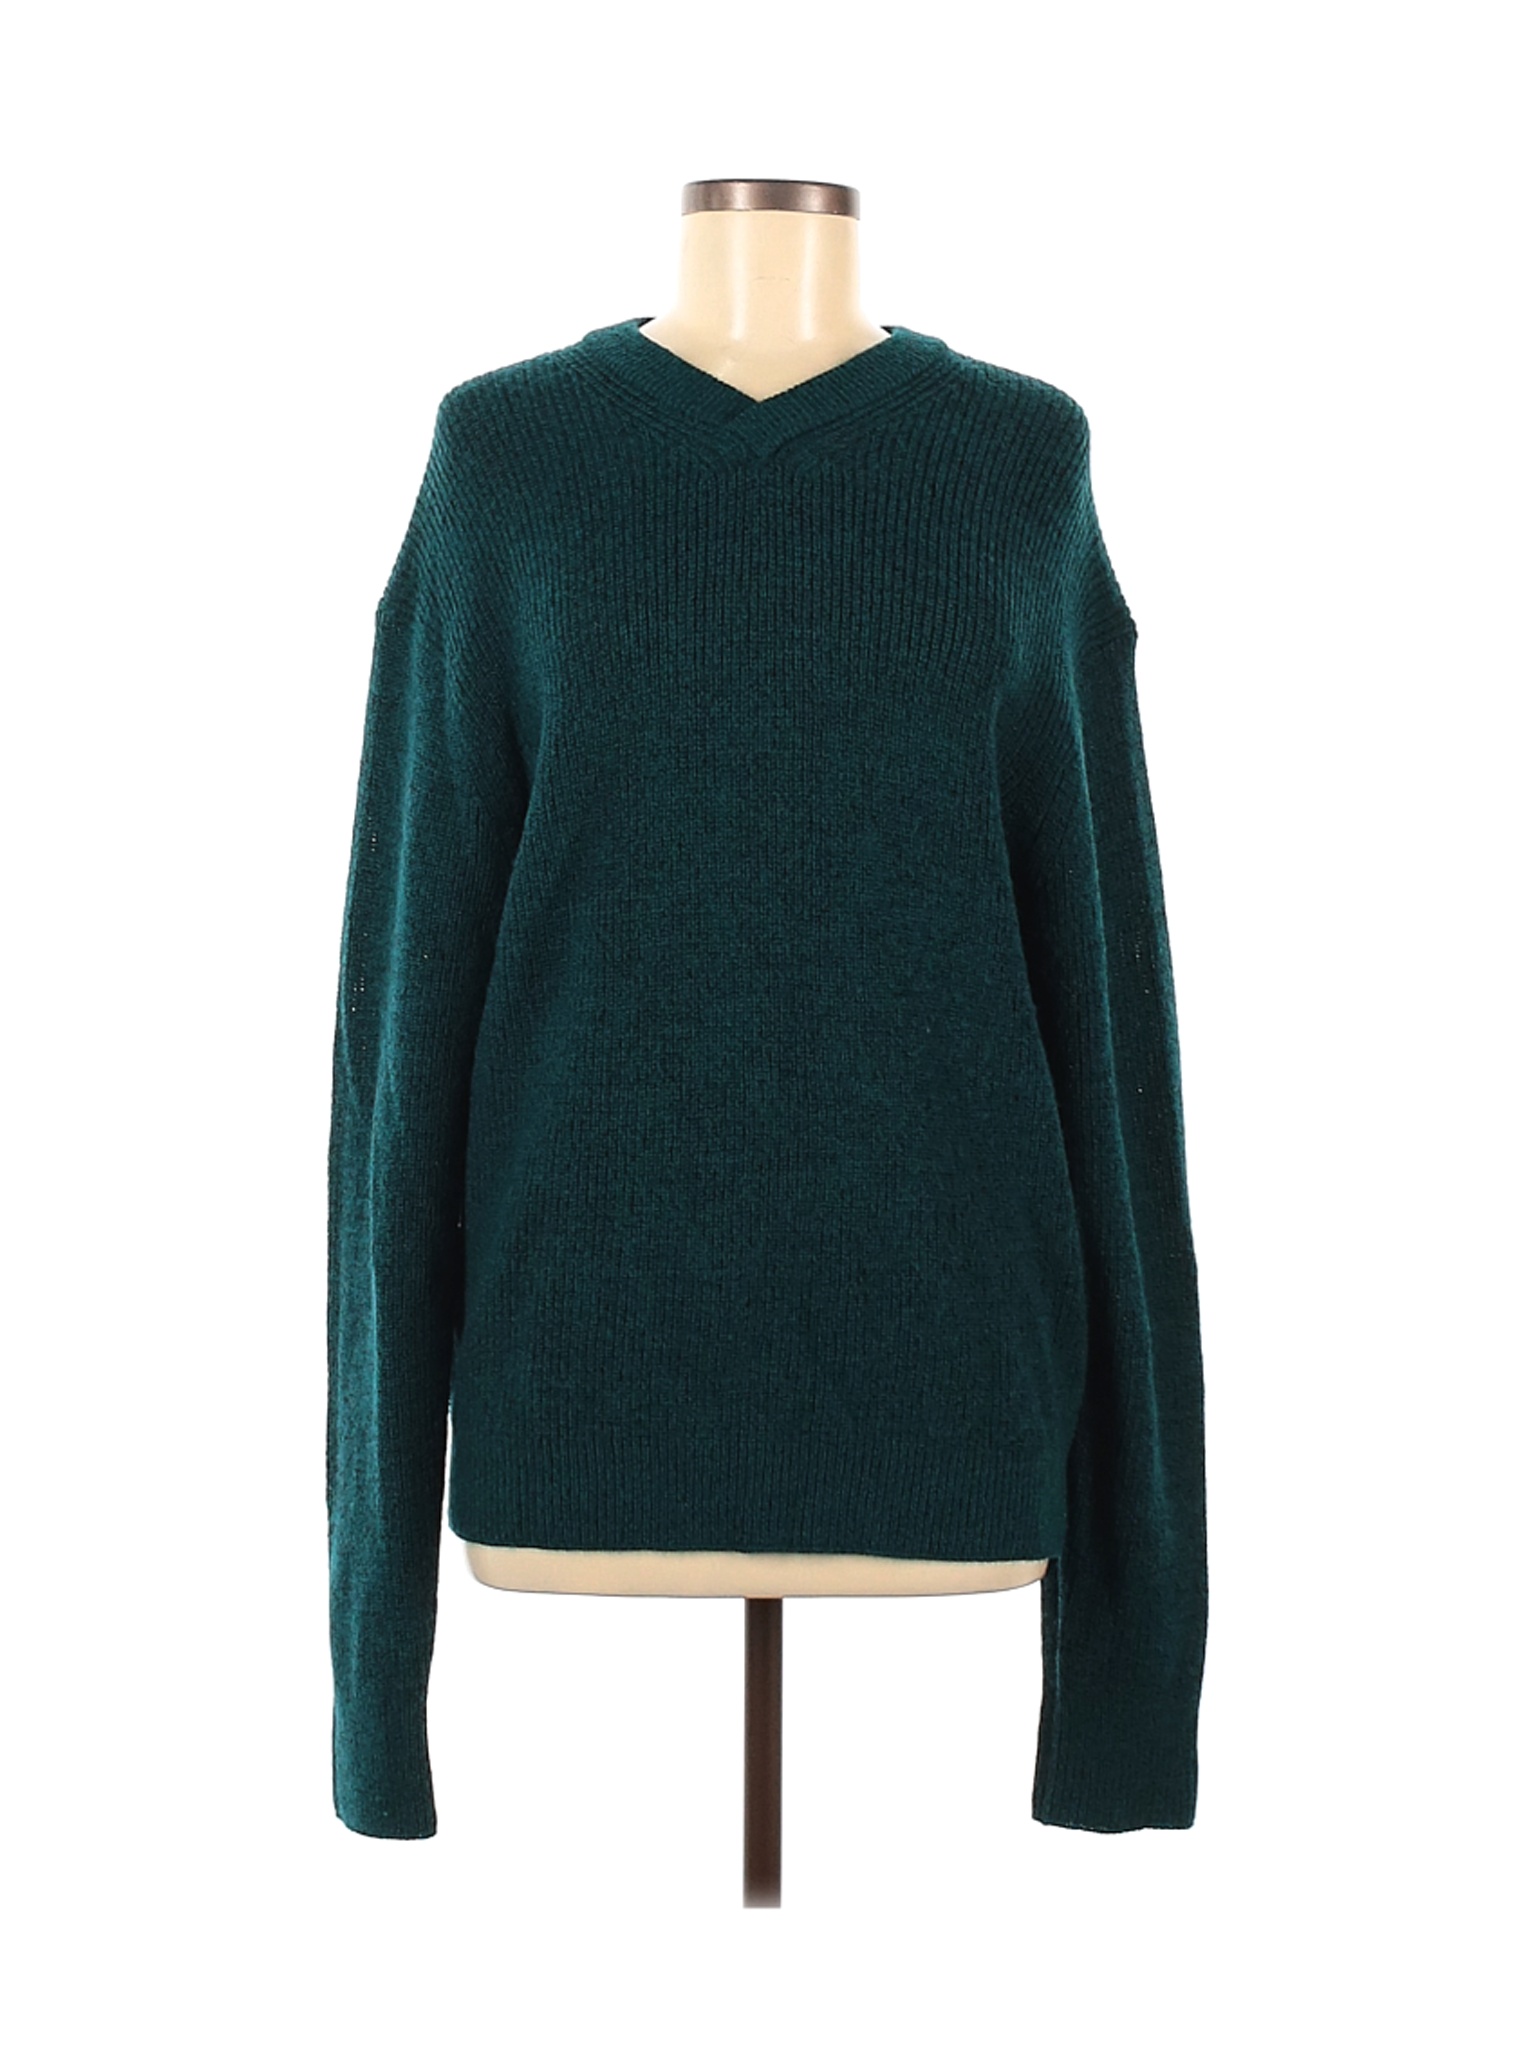 Uniqlo U Women Green Wool Pullover Sweater M | eBay